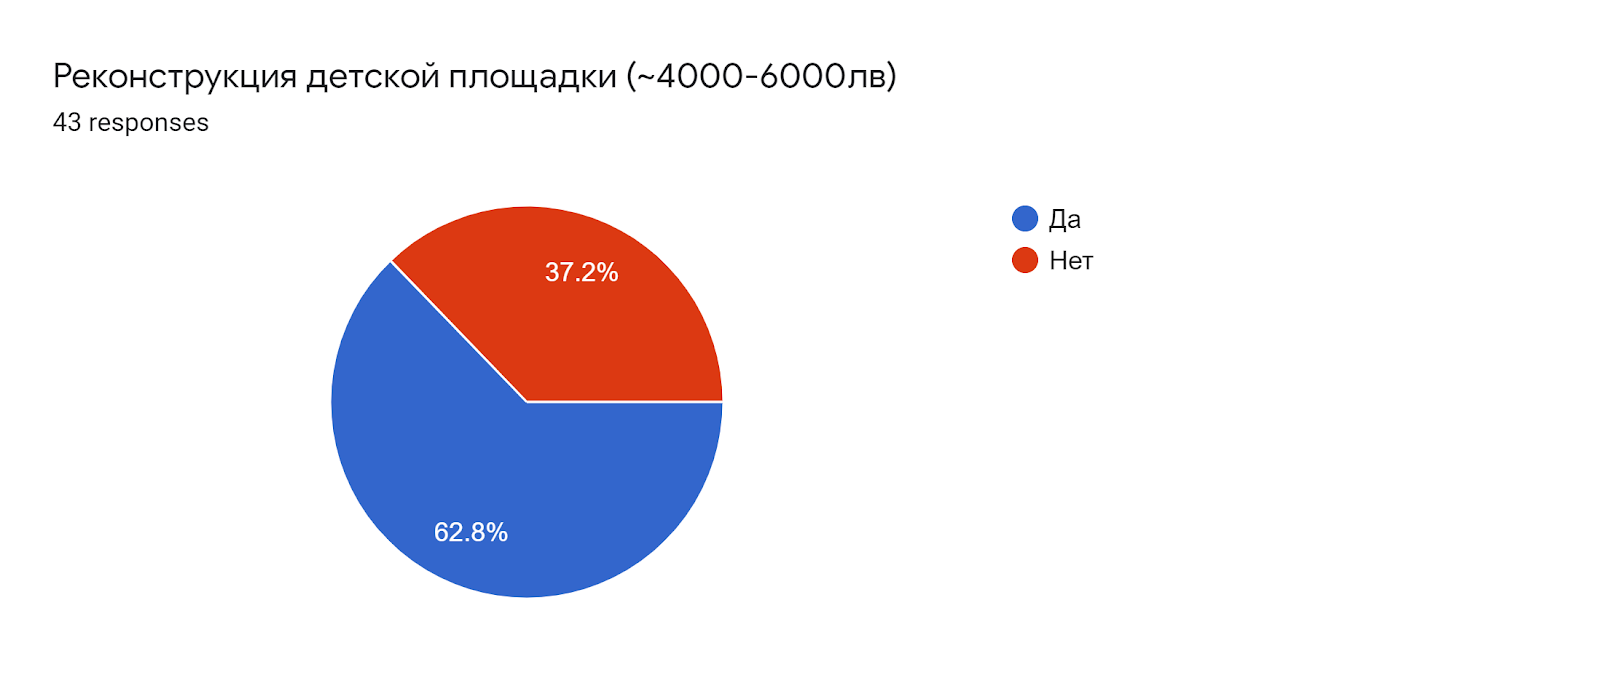 Forms response chart. Question title: Реконструкция детской площадки (~4000-6000лв). Number of responses: 43 responses.